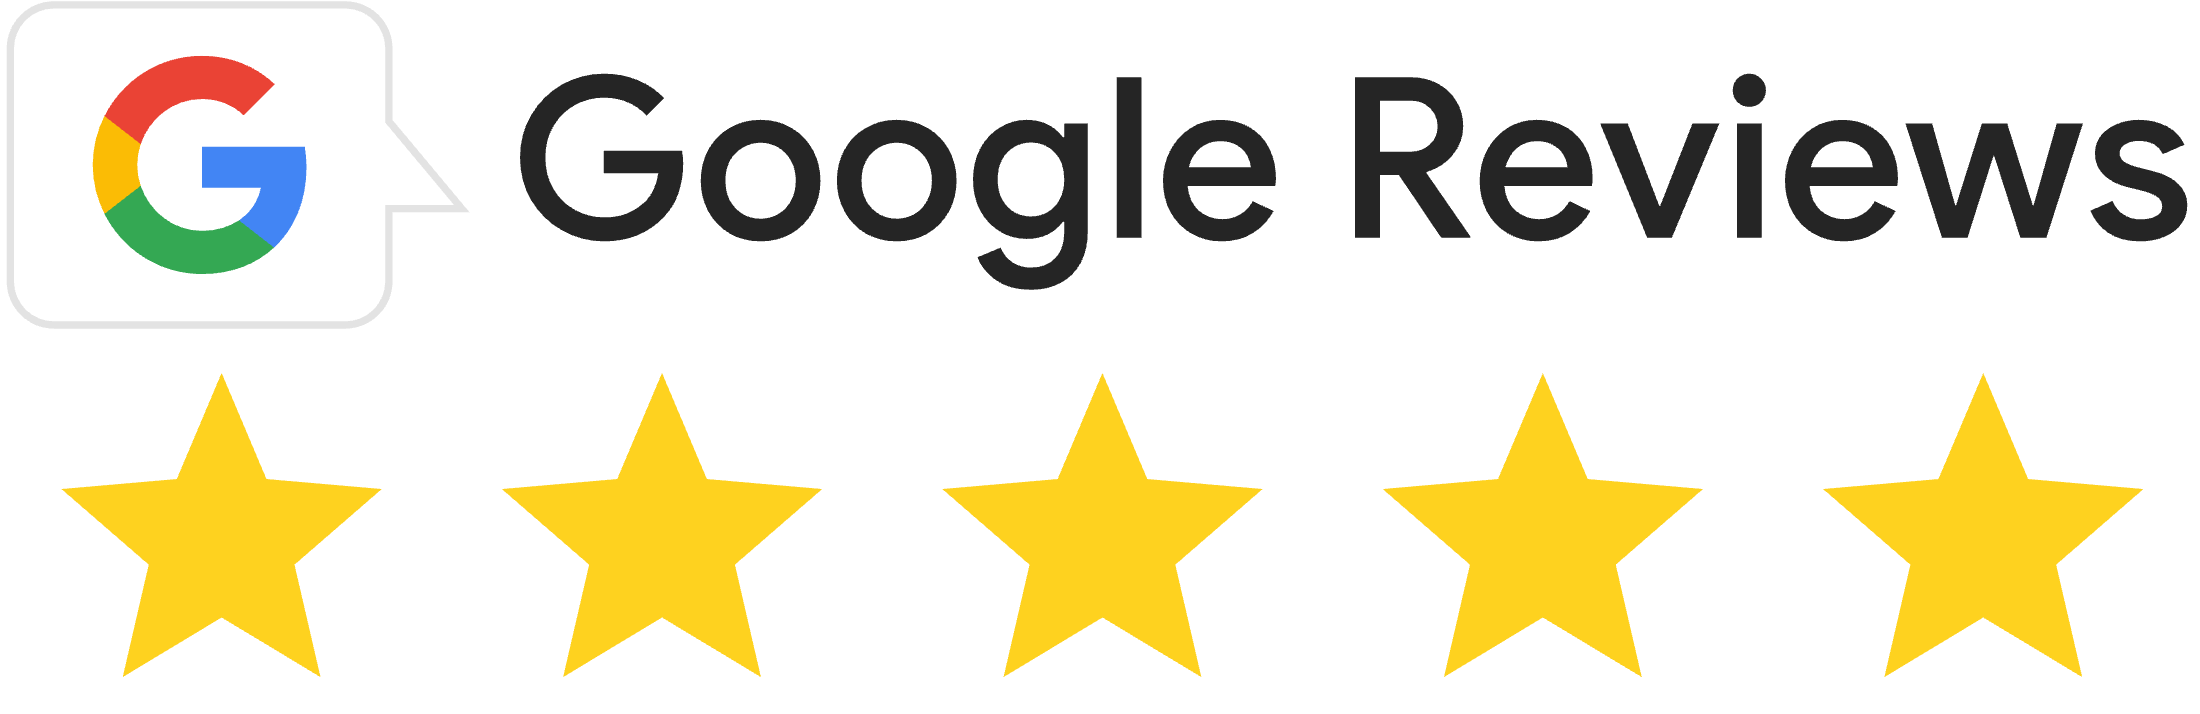 Google Review logotyp